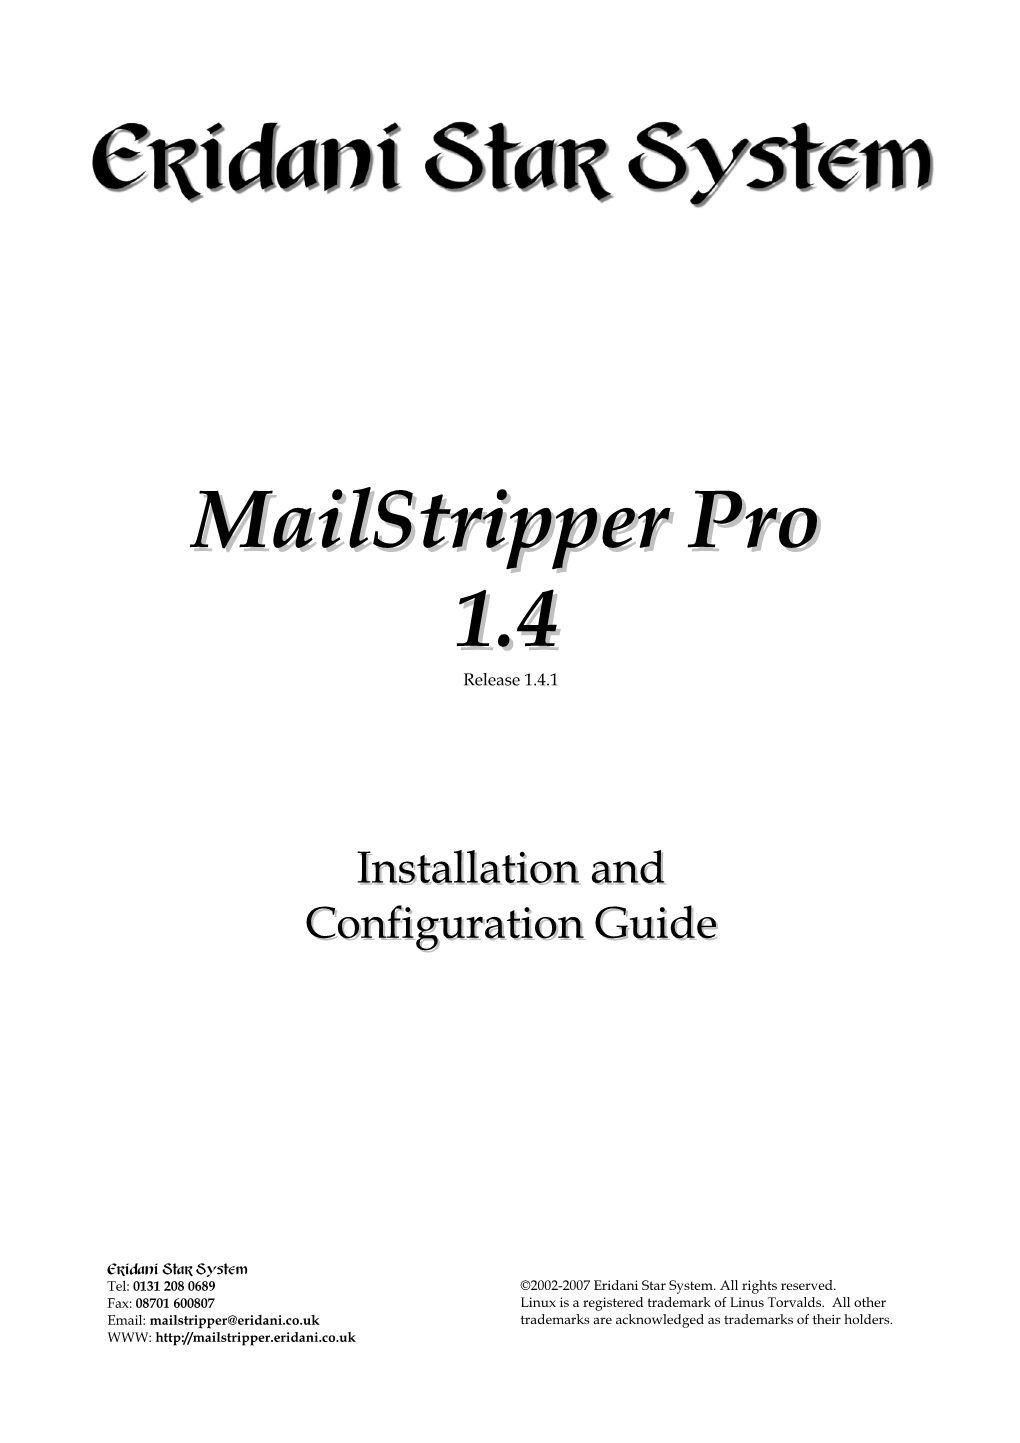 Mailstripper Pro User Guide 1 Eridani Star System INSTALLATION